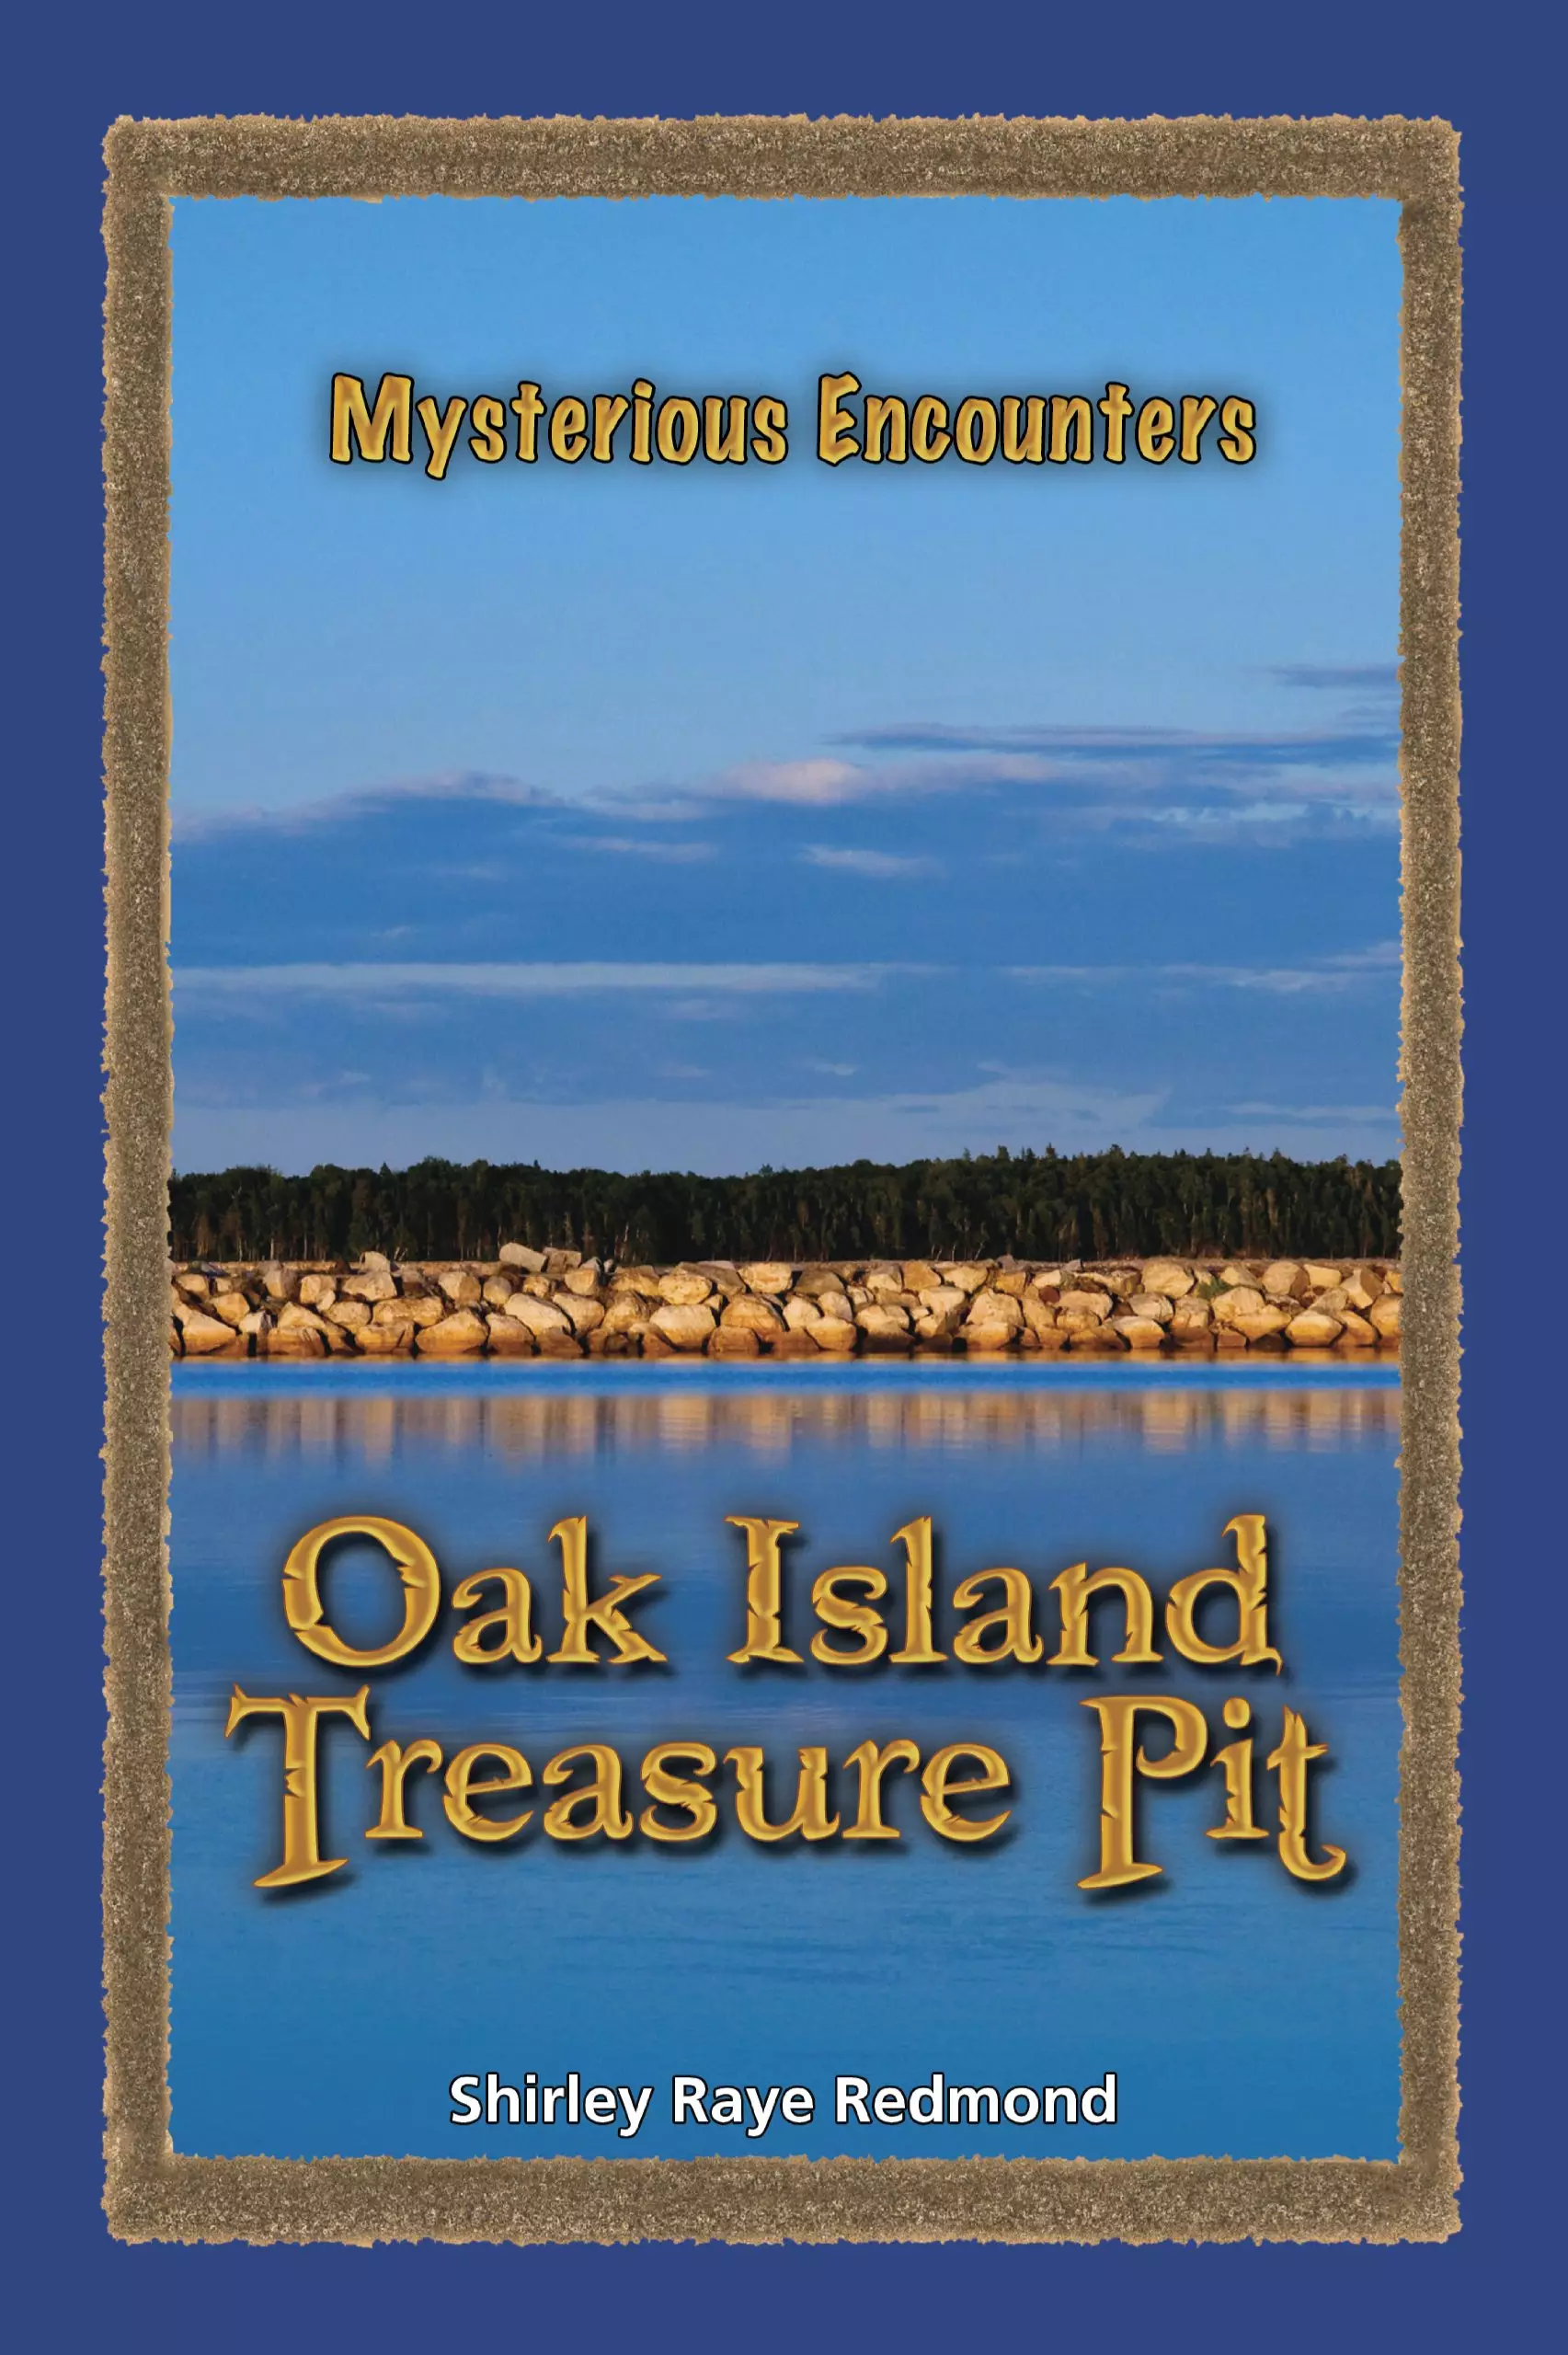 The Oak Island Treasure Pit